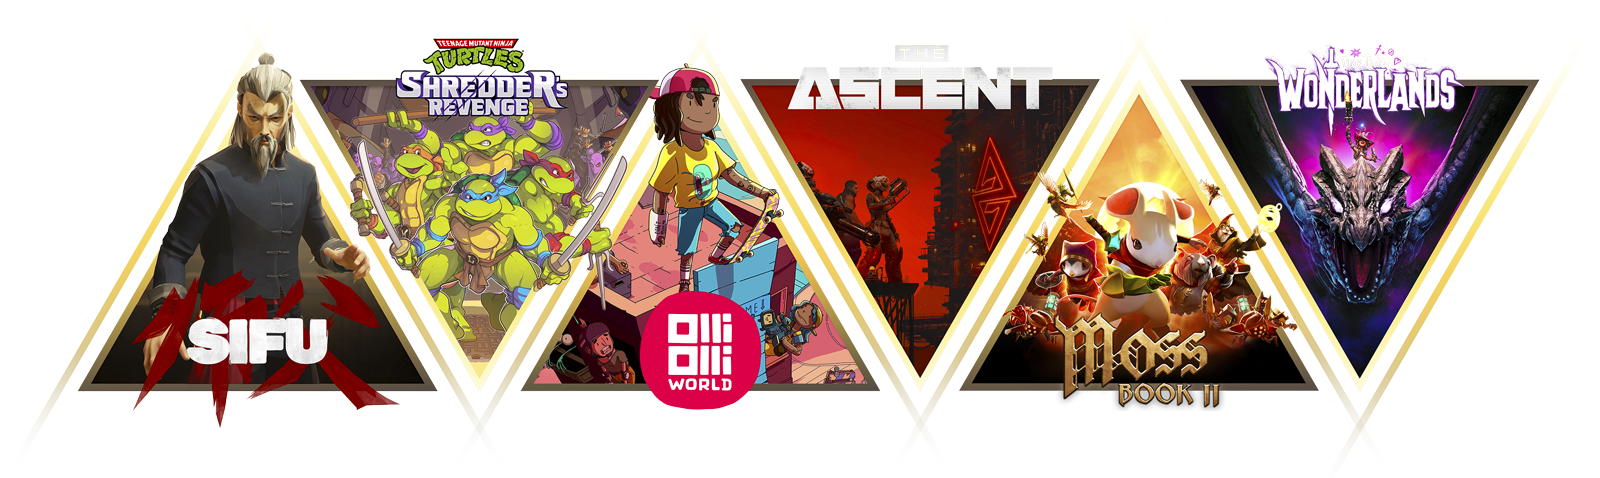 Zestawienie bohaterów z gier Sifu, Teenage Mutant Ninja Turtles: Shredder's Revenge, OlliOlli World, The Ascent, Moss: Book II i Tiny Tina's Wonderlands.